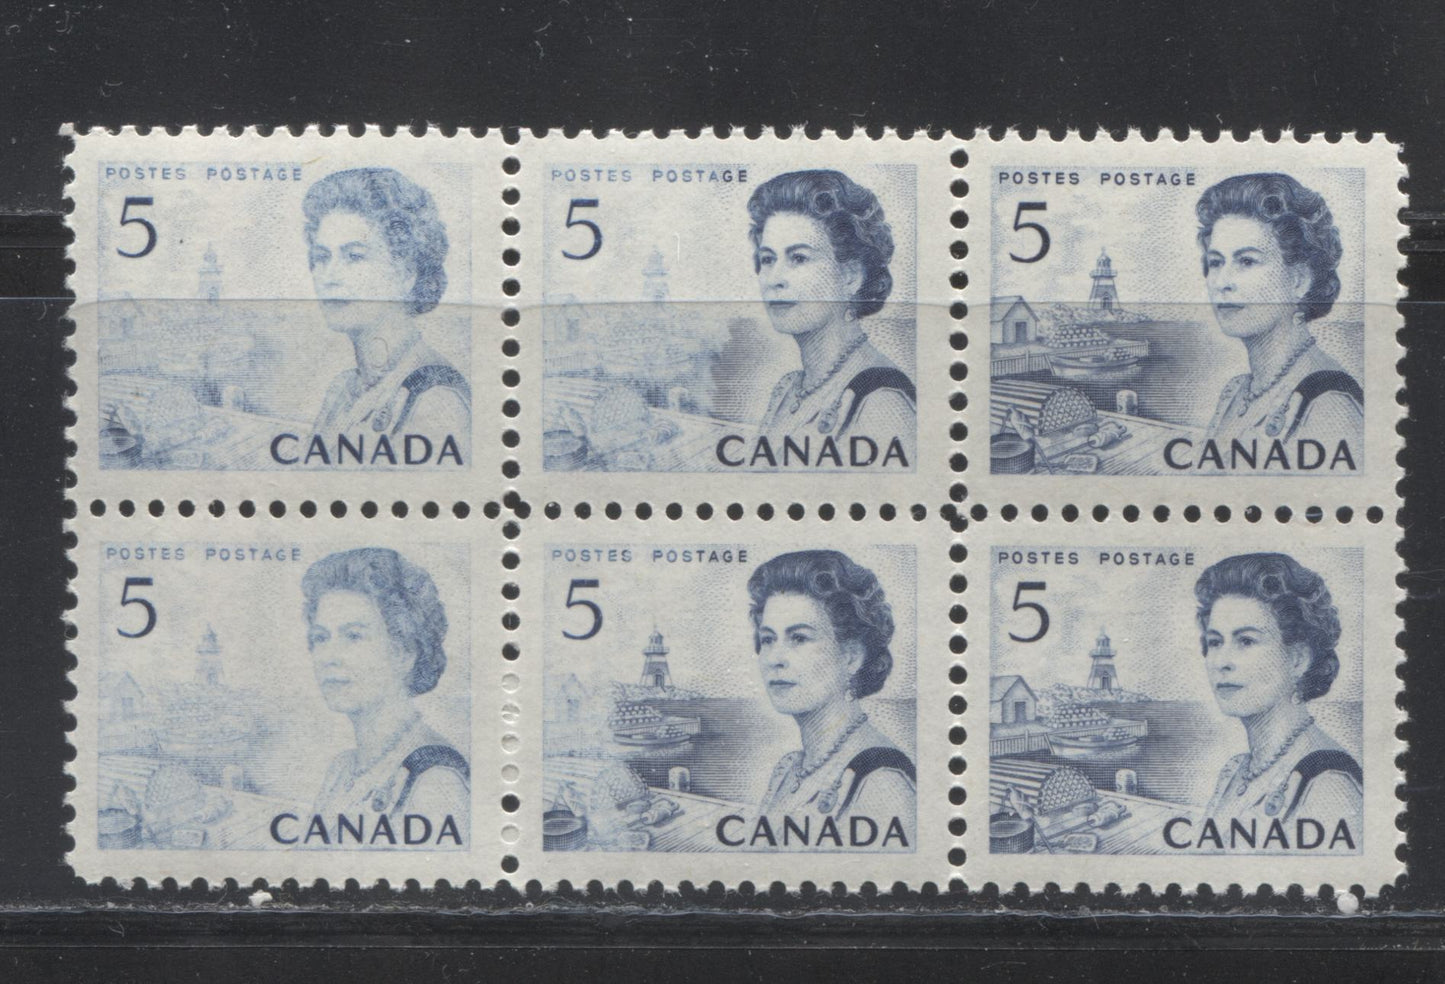 Lot 229 Canada #458ii 5c Blue Fishing Village, 1967-1973 Centennial Definitive Issue, A VFNH Block of 6 Showing Underinking Error, Ex Prince